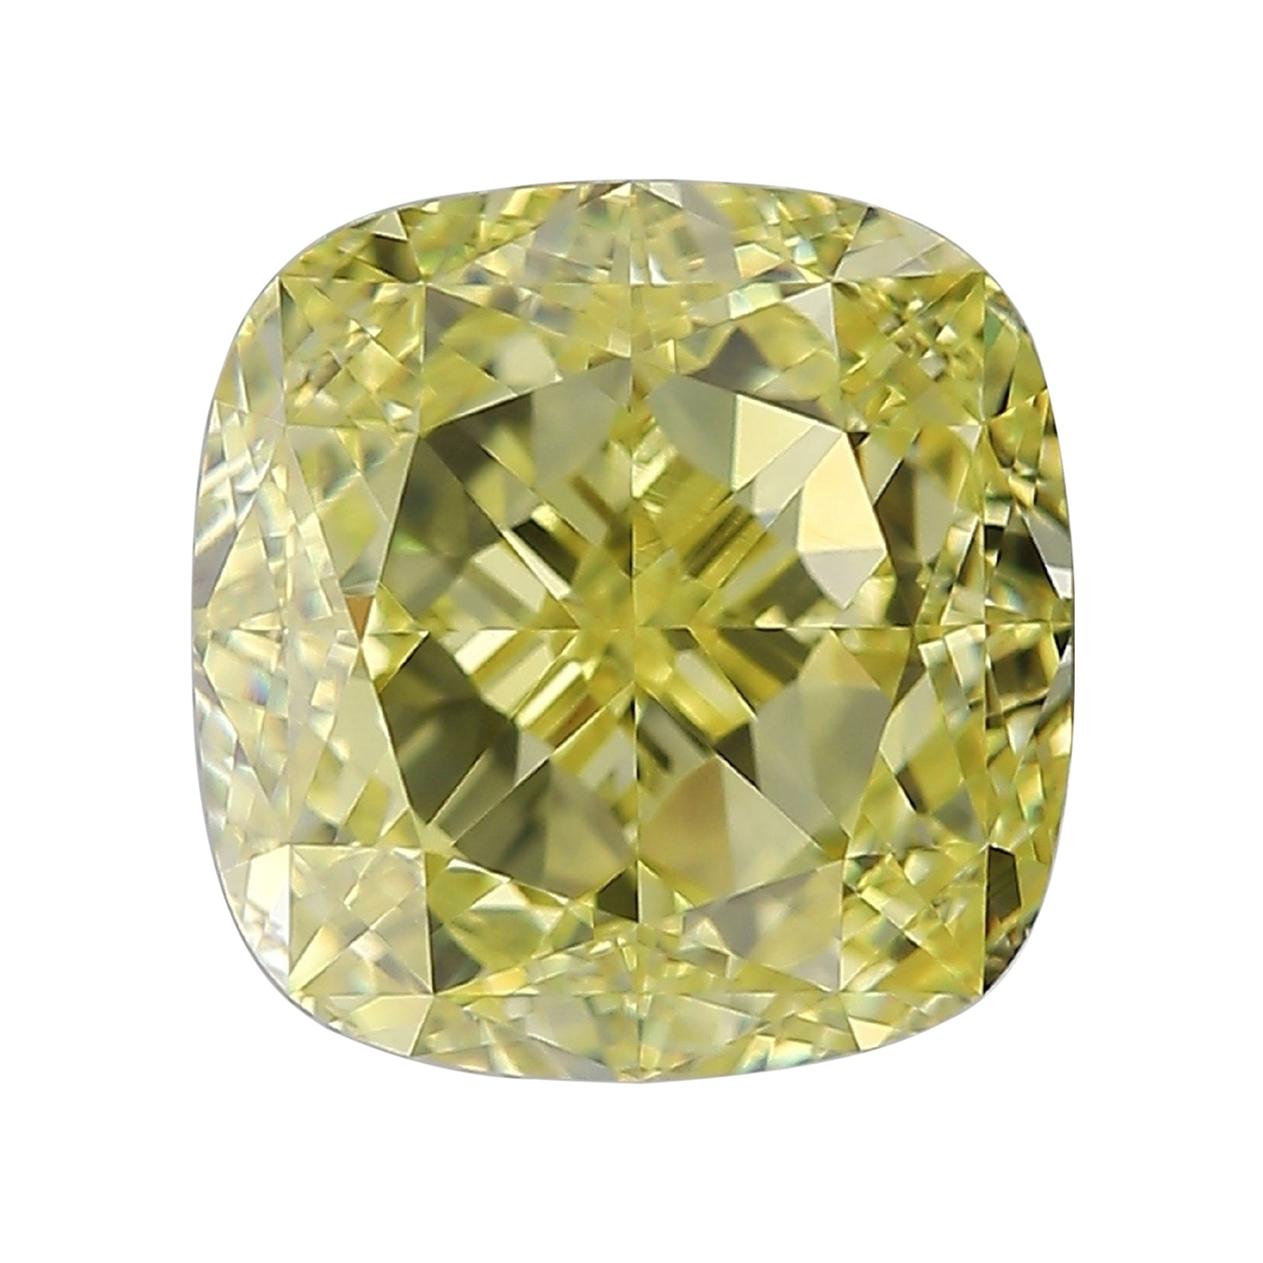 I Flawless GIA Certified 3.51 Carat Fancy Intense Yellow Diamond